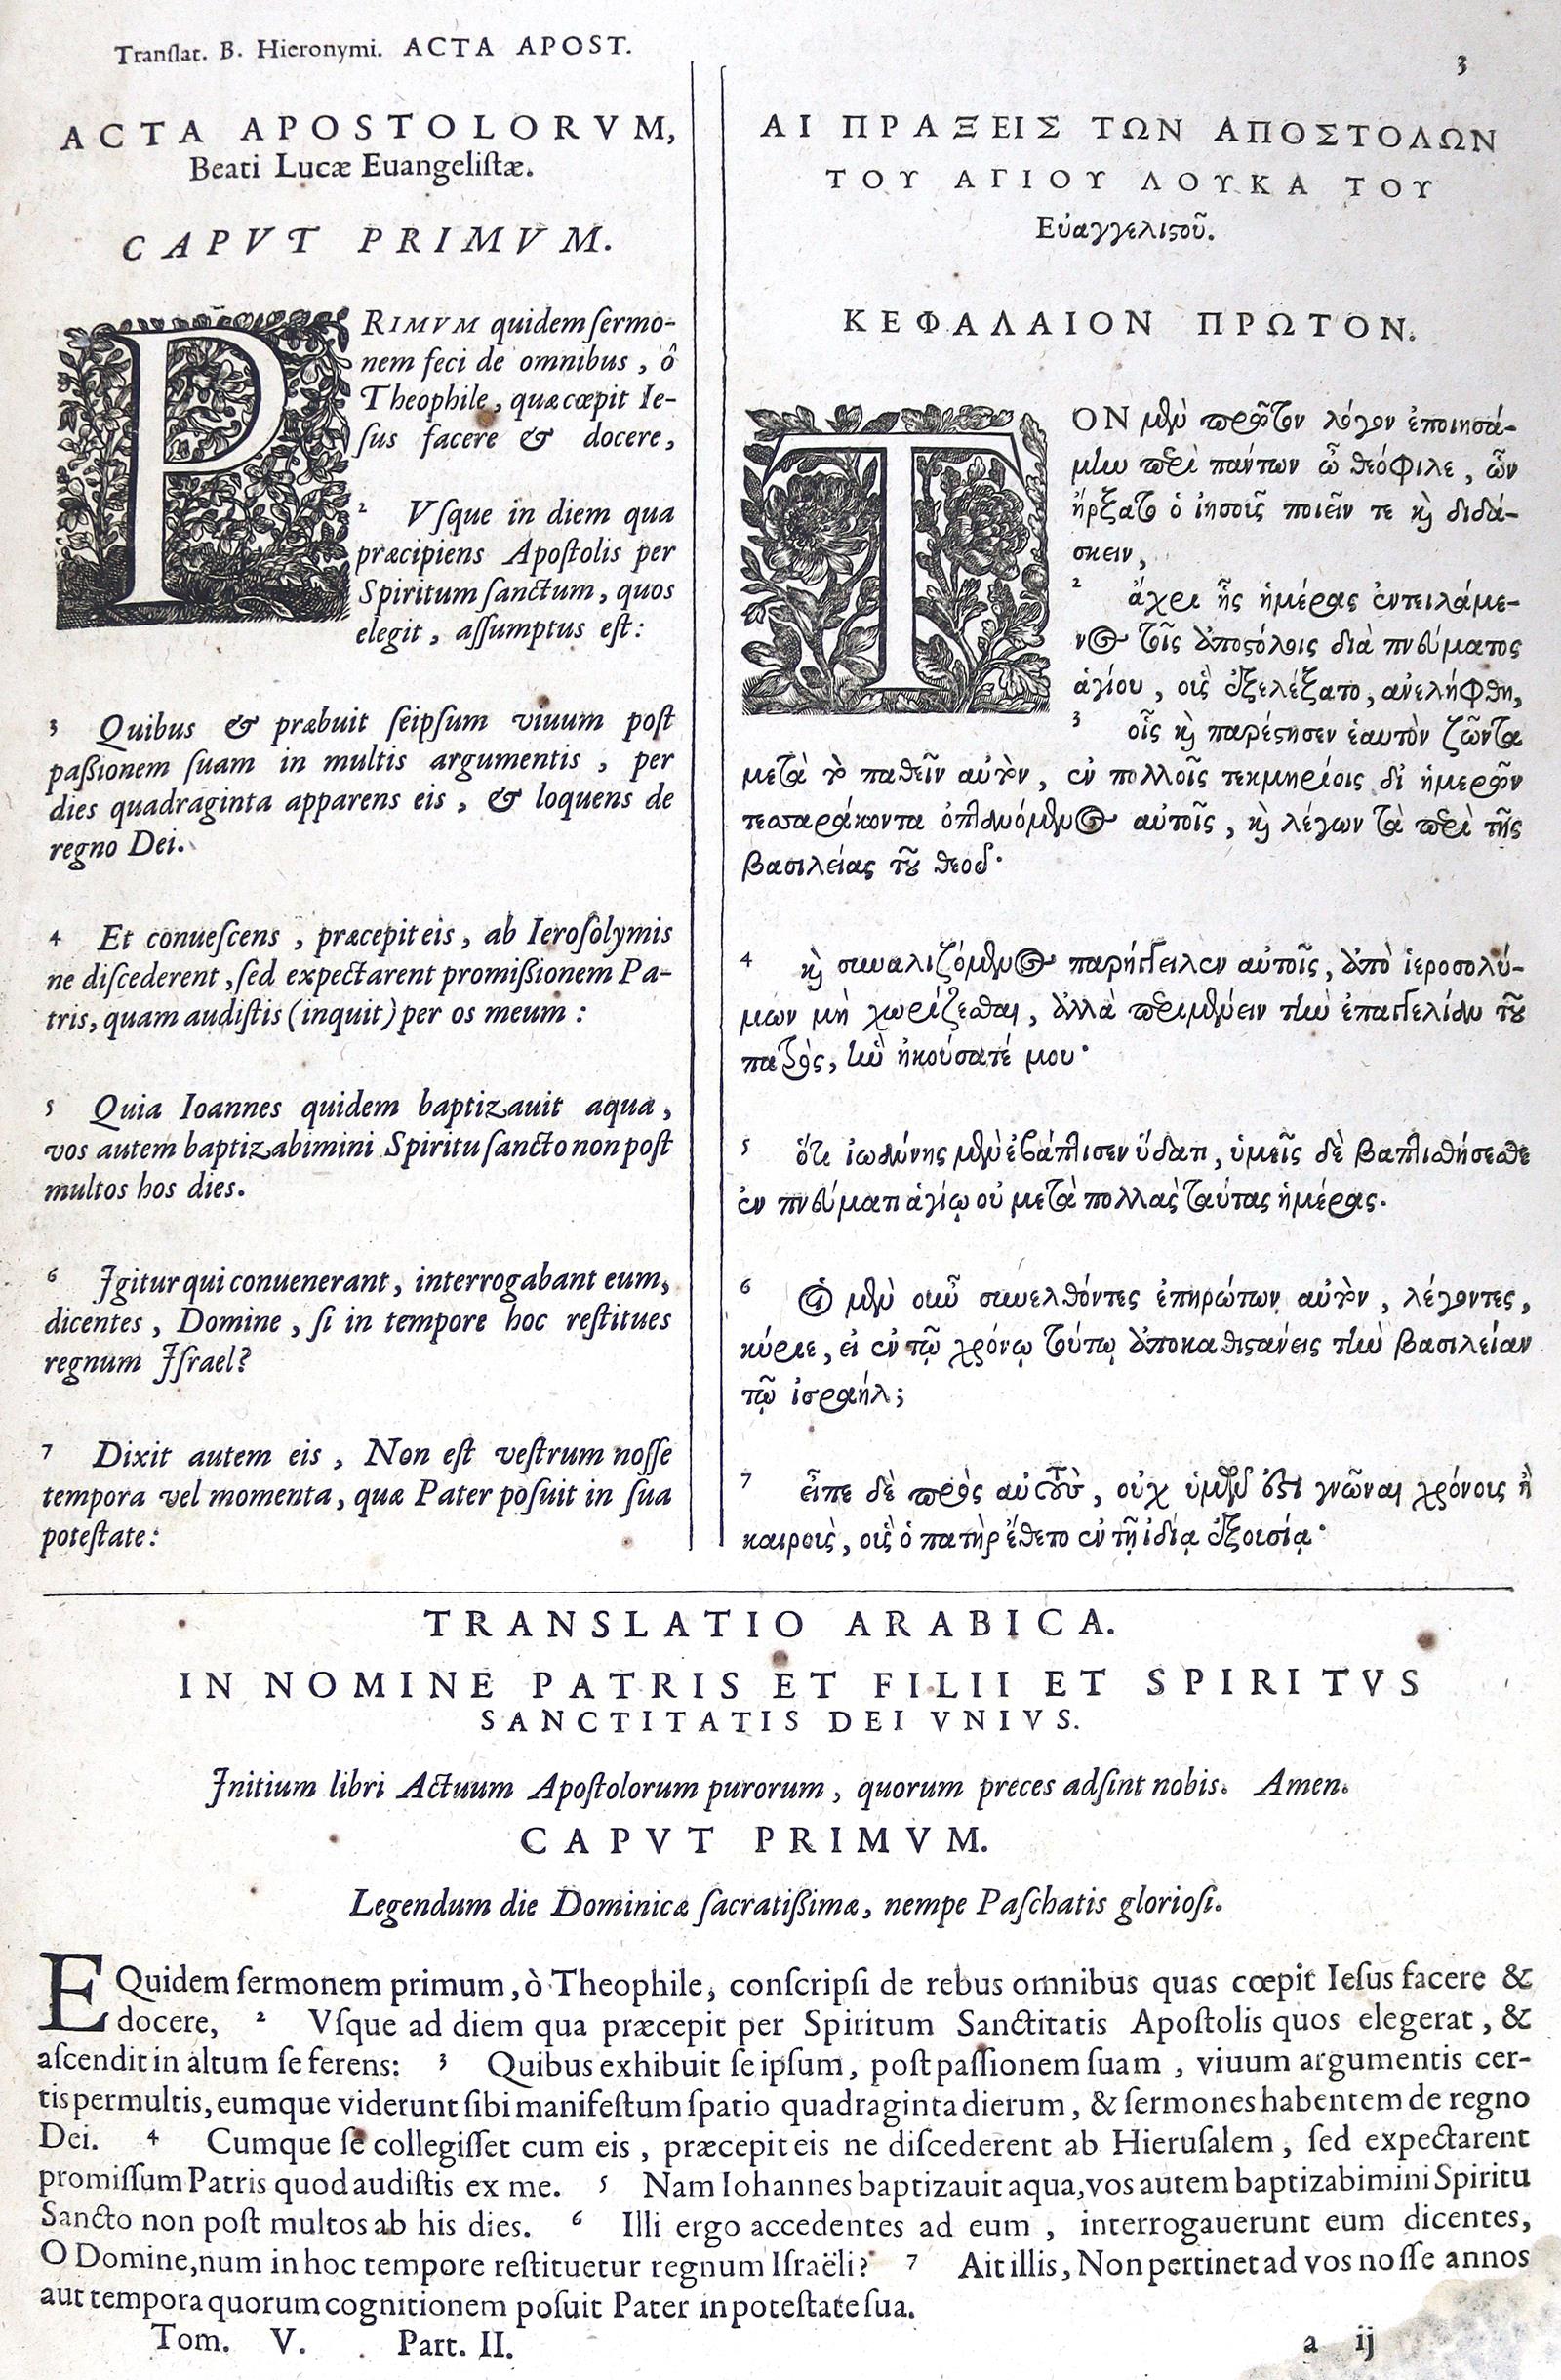 Biblia polyglotta. | Bild Nr.1